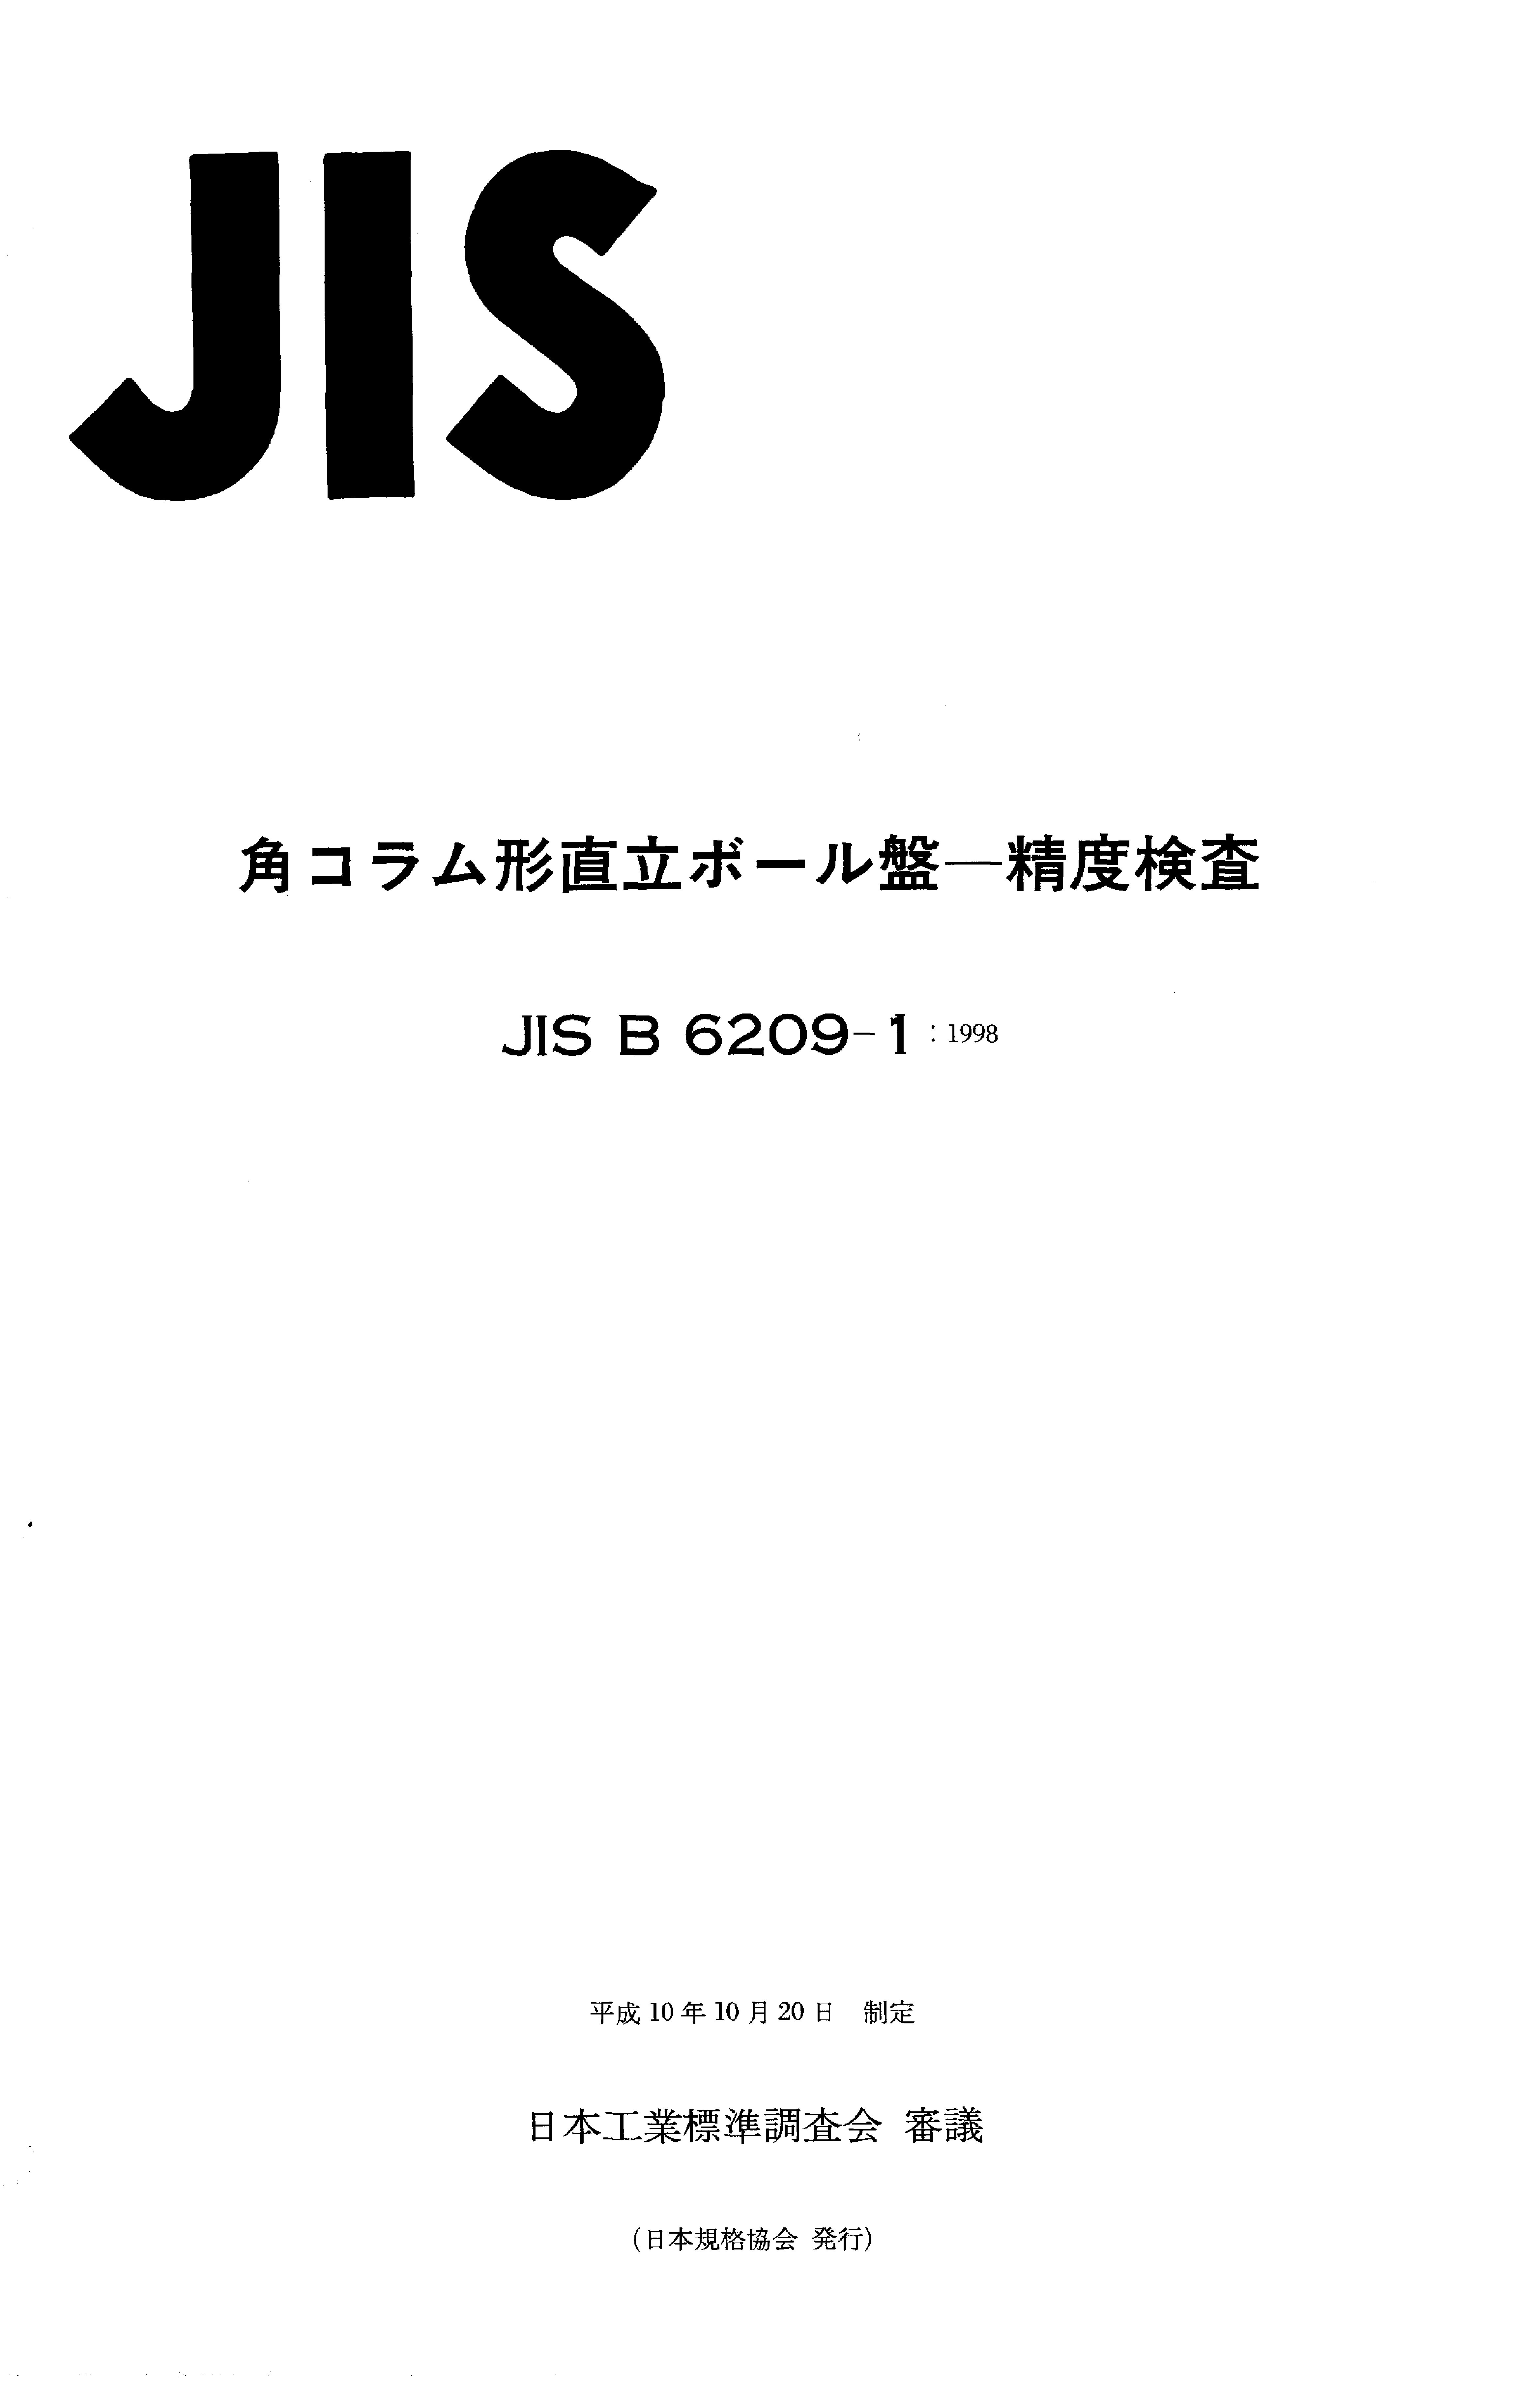 JIS B 6209-1:1998